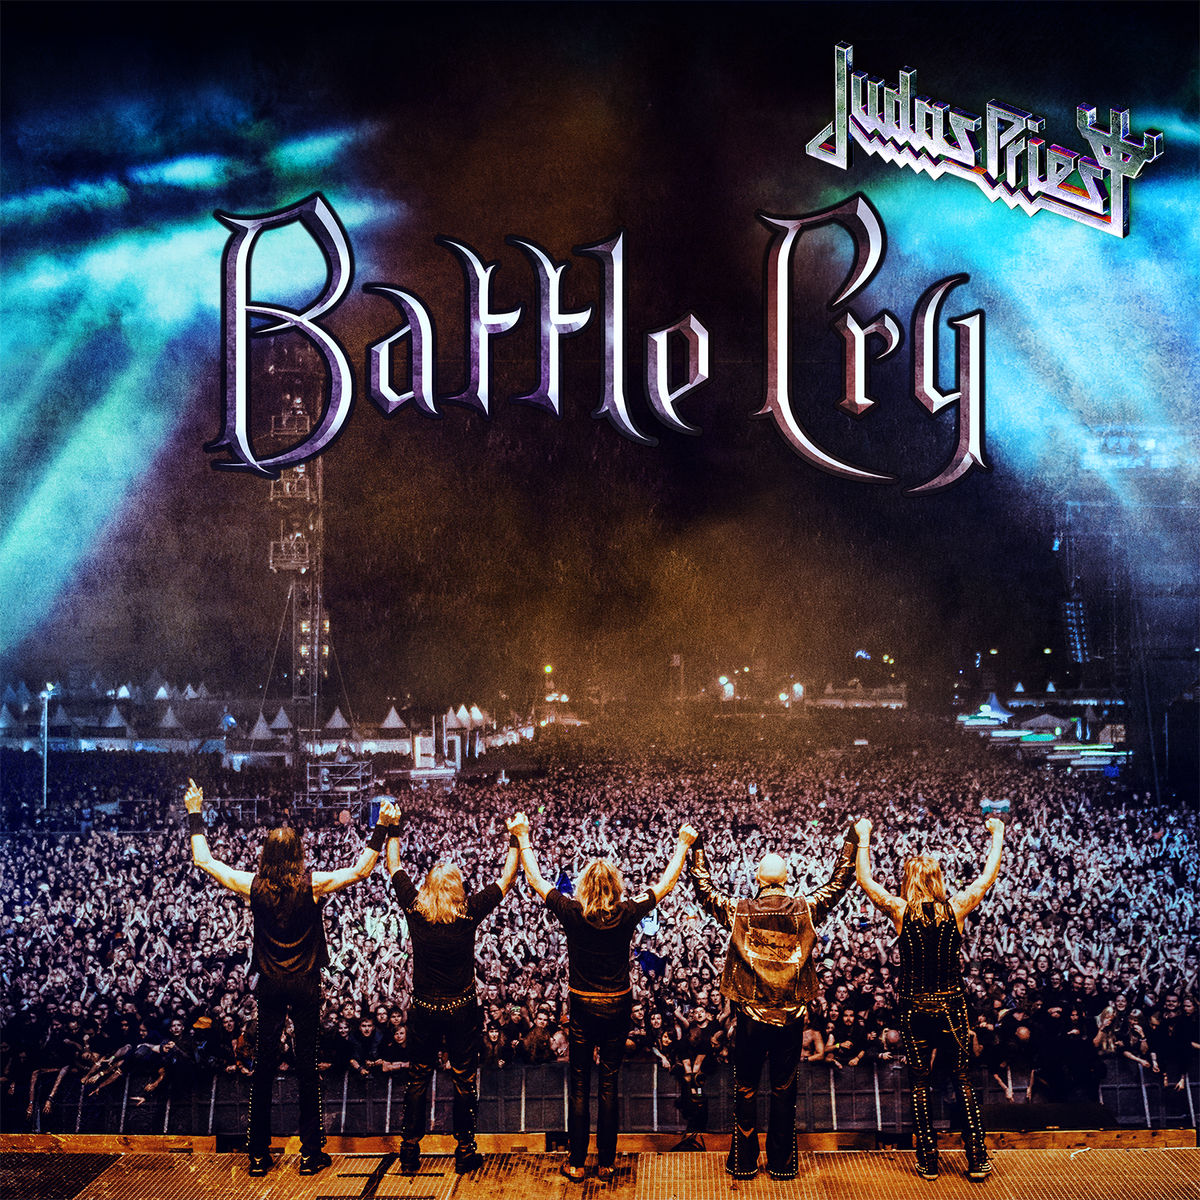 Judas Priest - Battle Cry (2016) [HDTracks FLAC 24bit/48kHz]